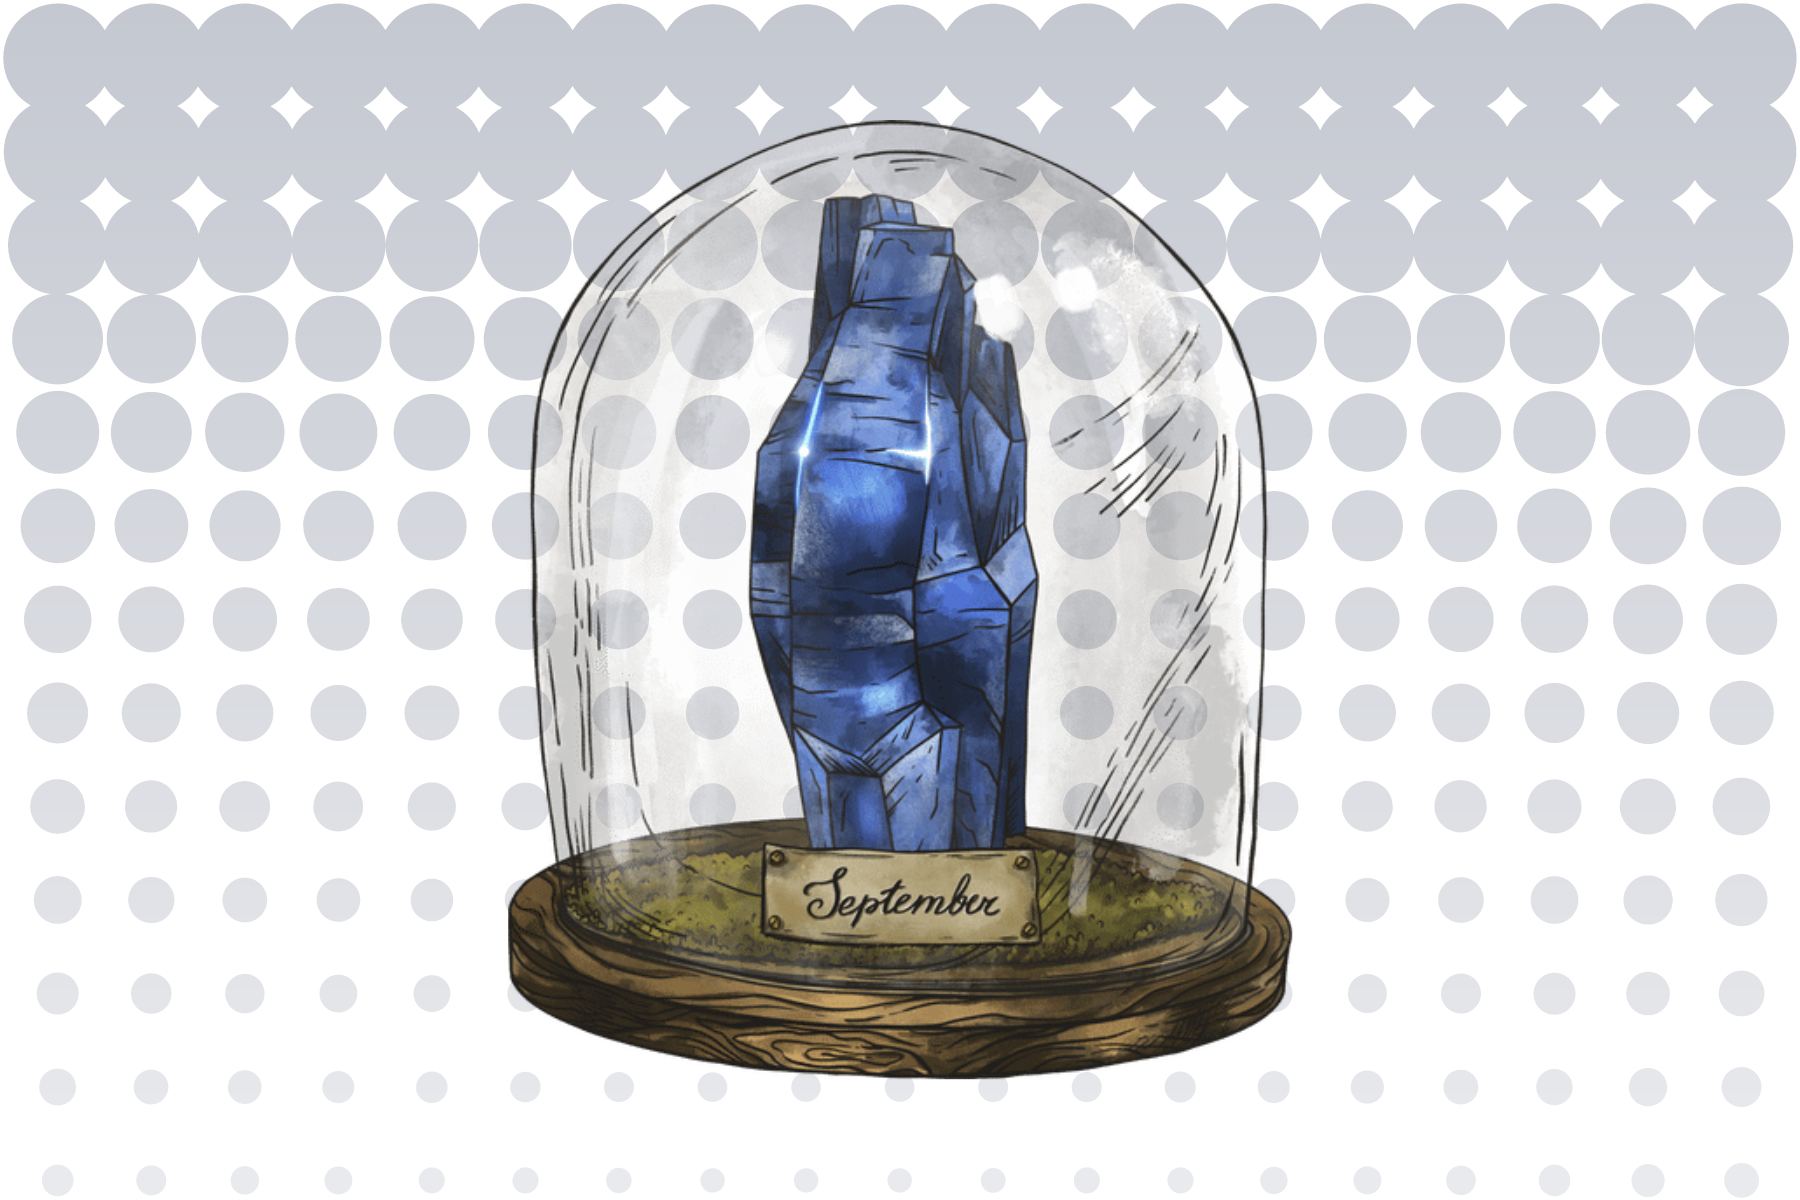 Sapphire stone inside a glass jar